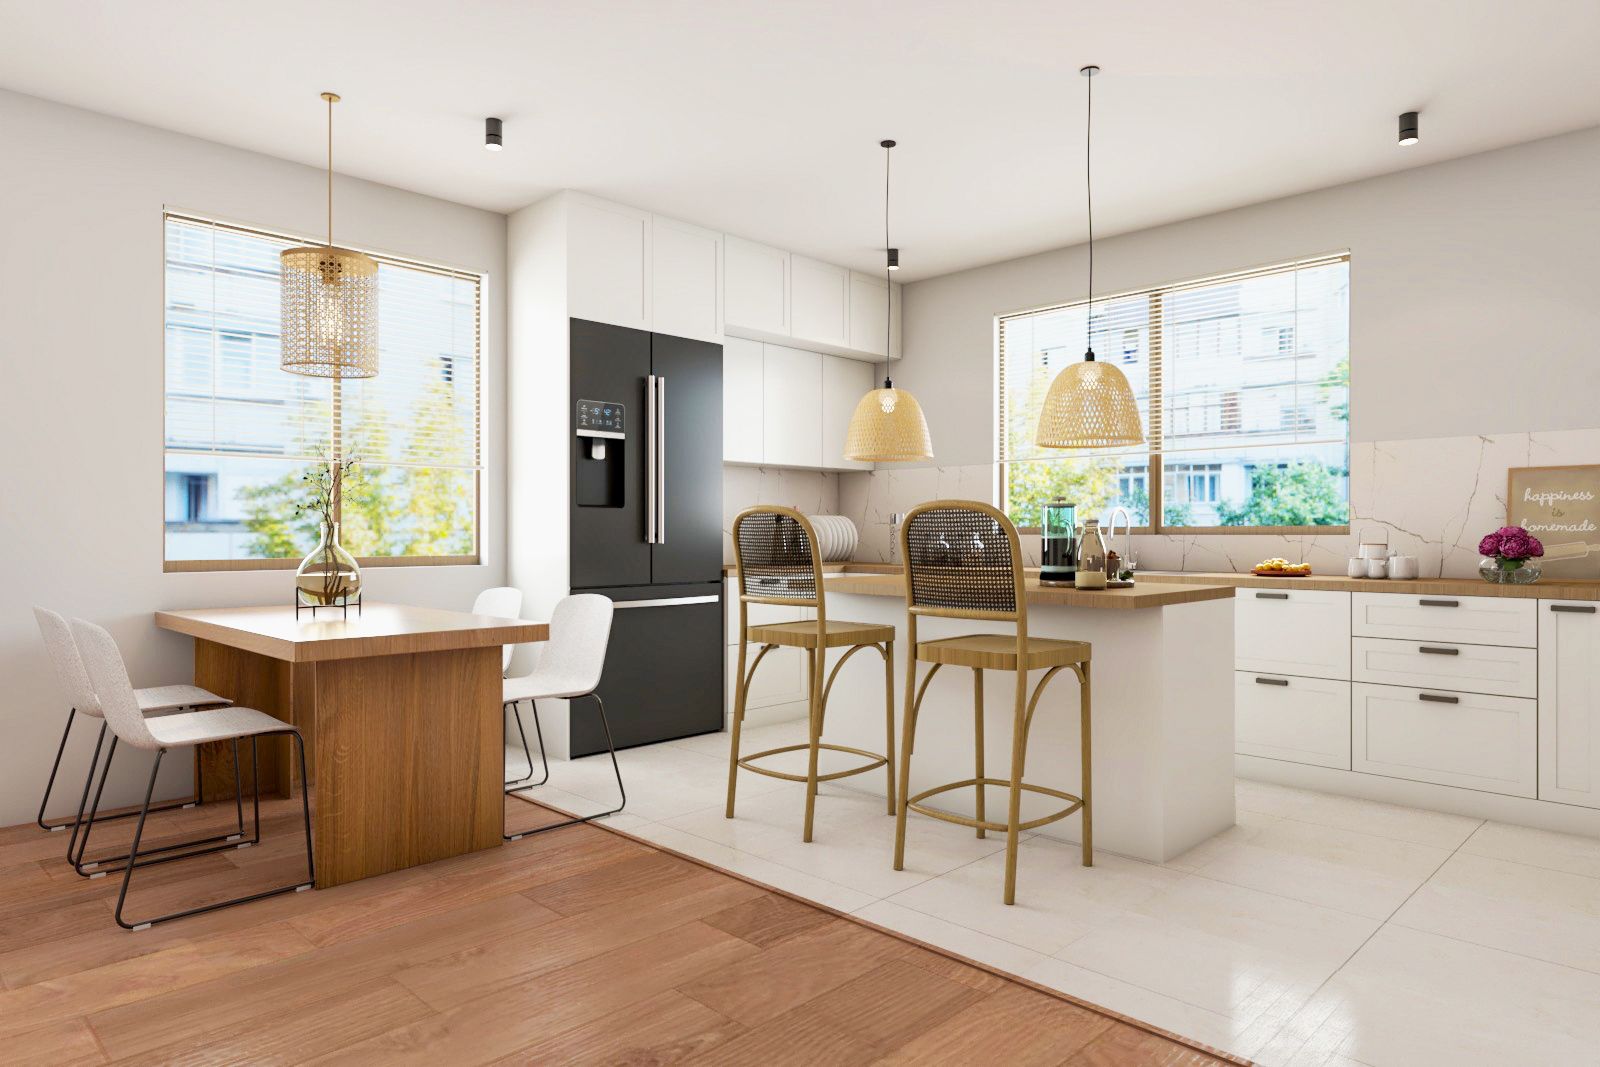 Scandinavian Modular Off-White And Wood Island Kitchen Design With Dual Flooring